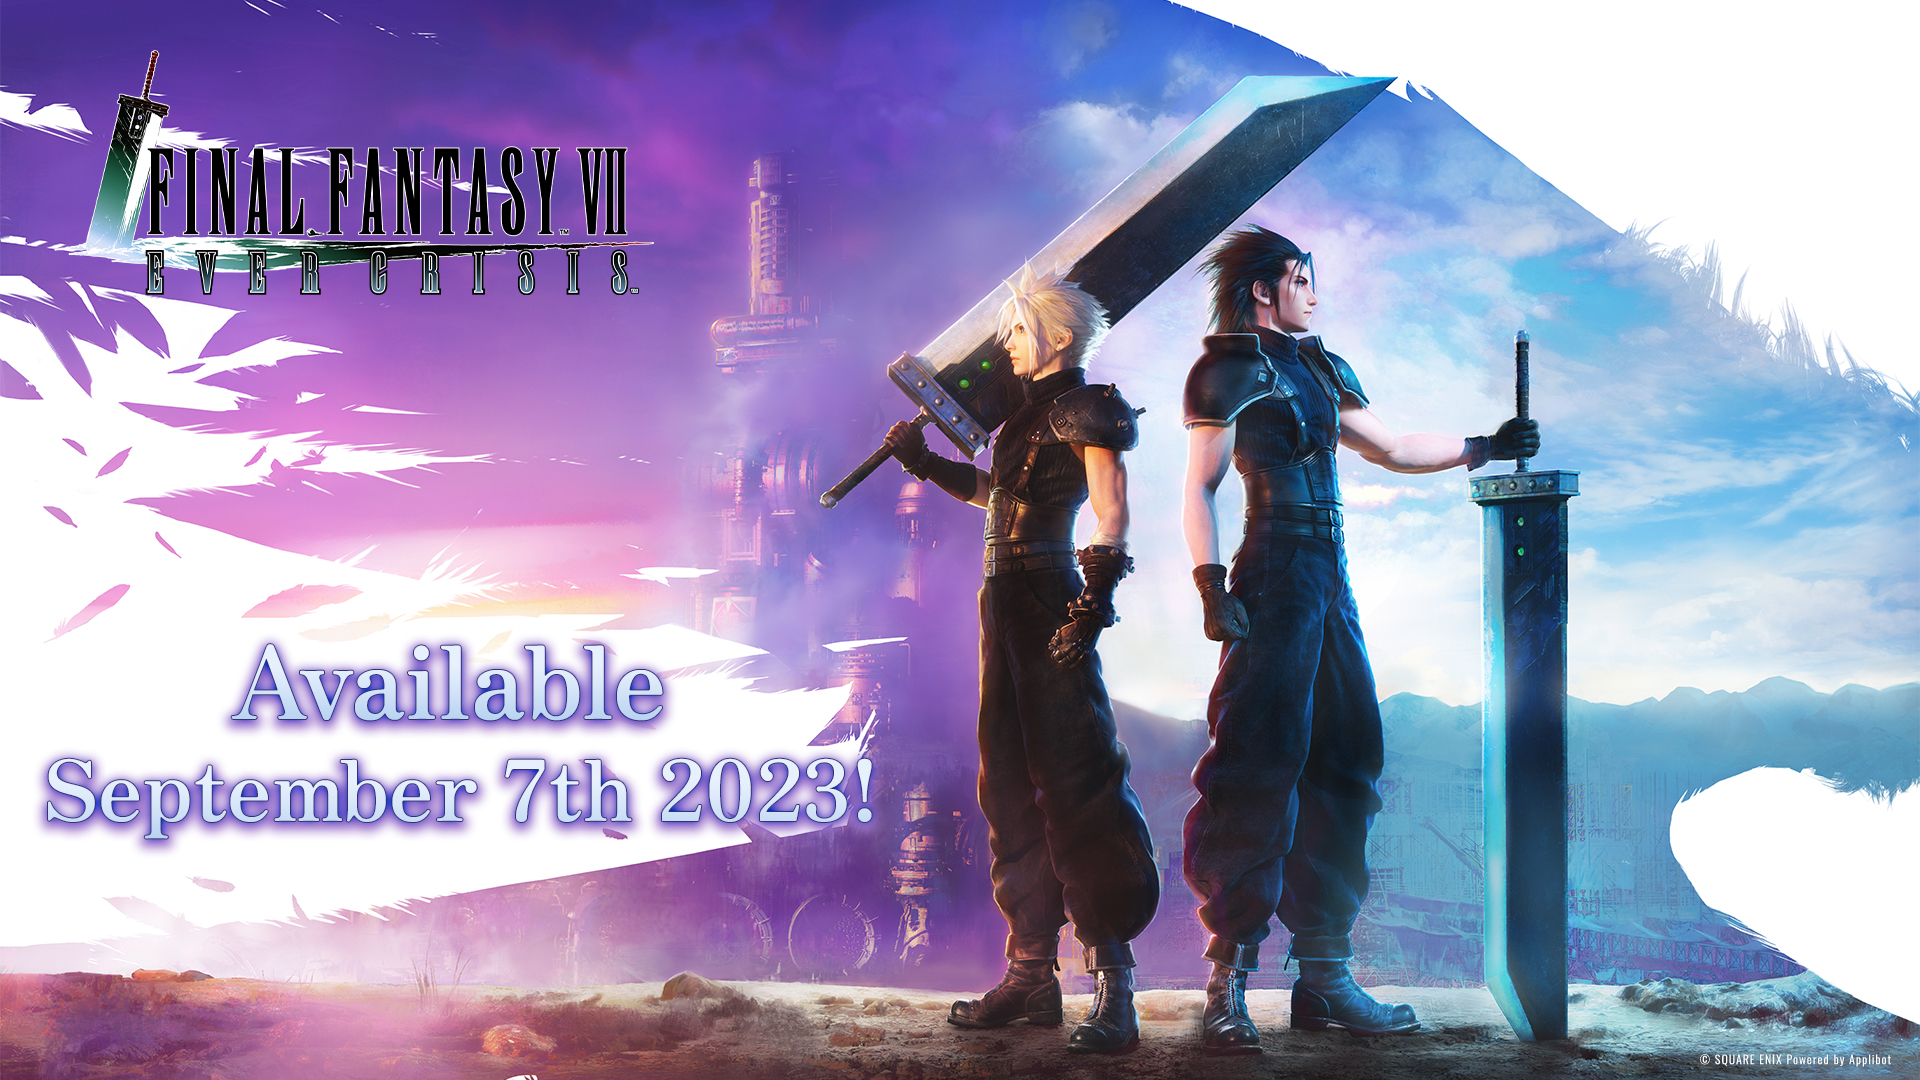 Final Fantasy VII Ever Crisis release date image